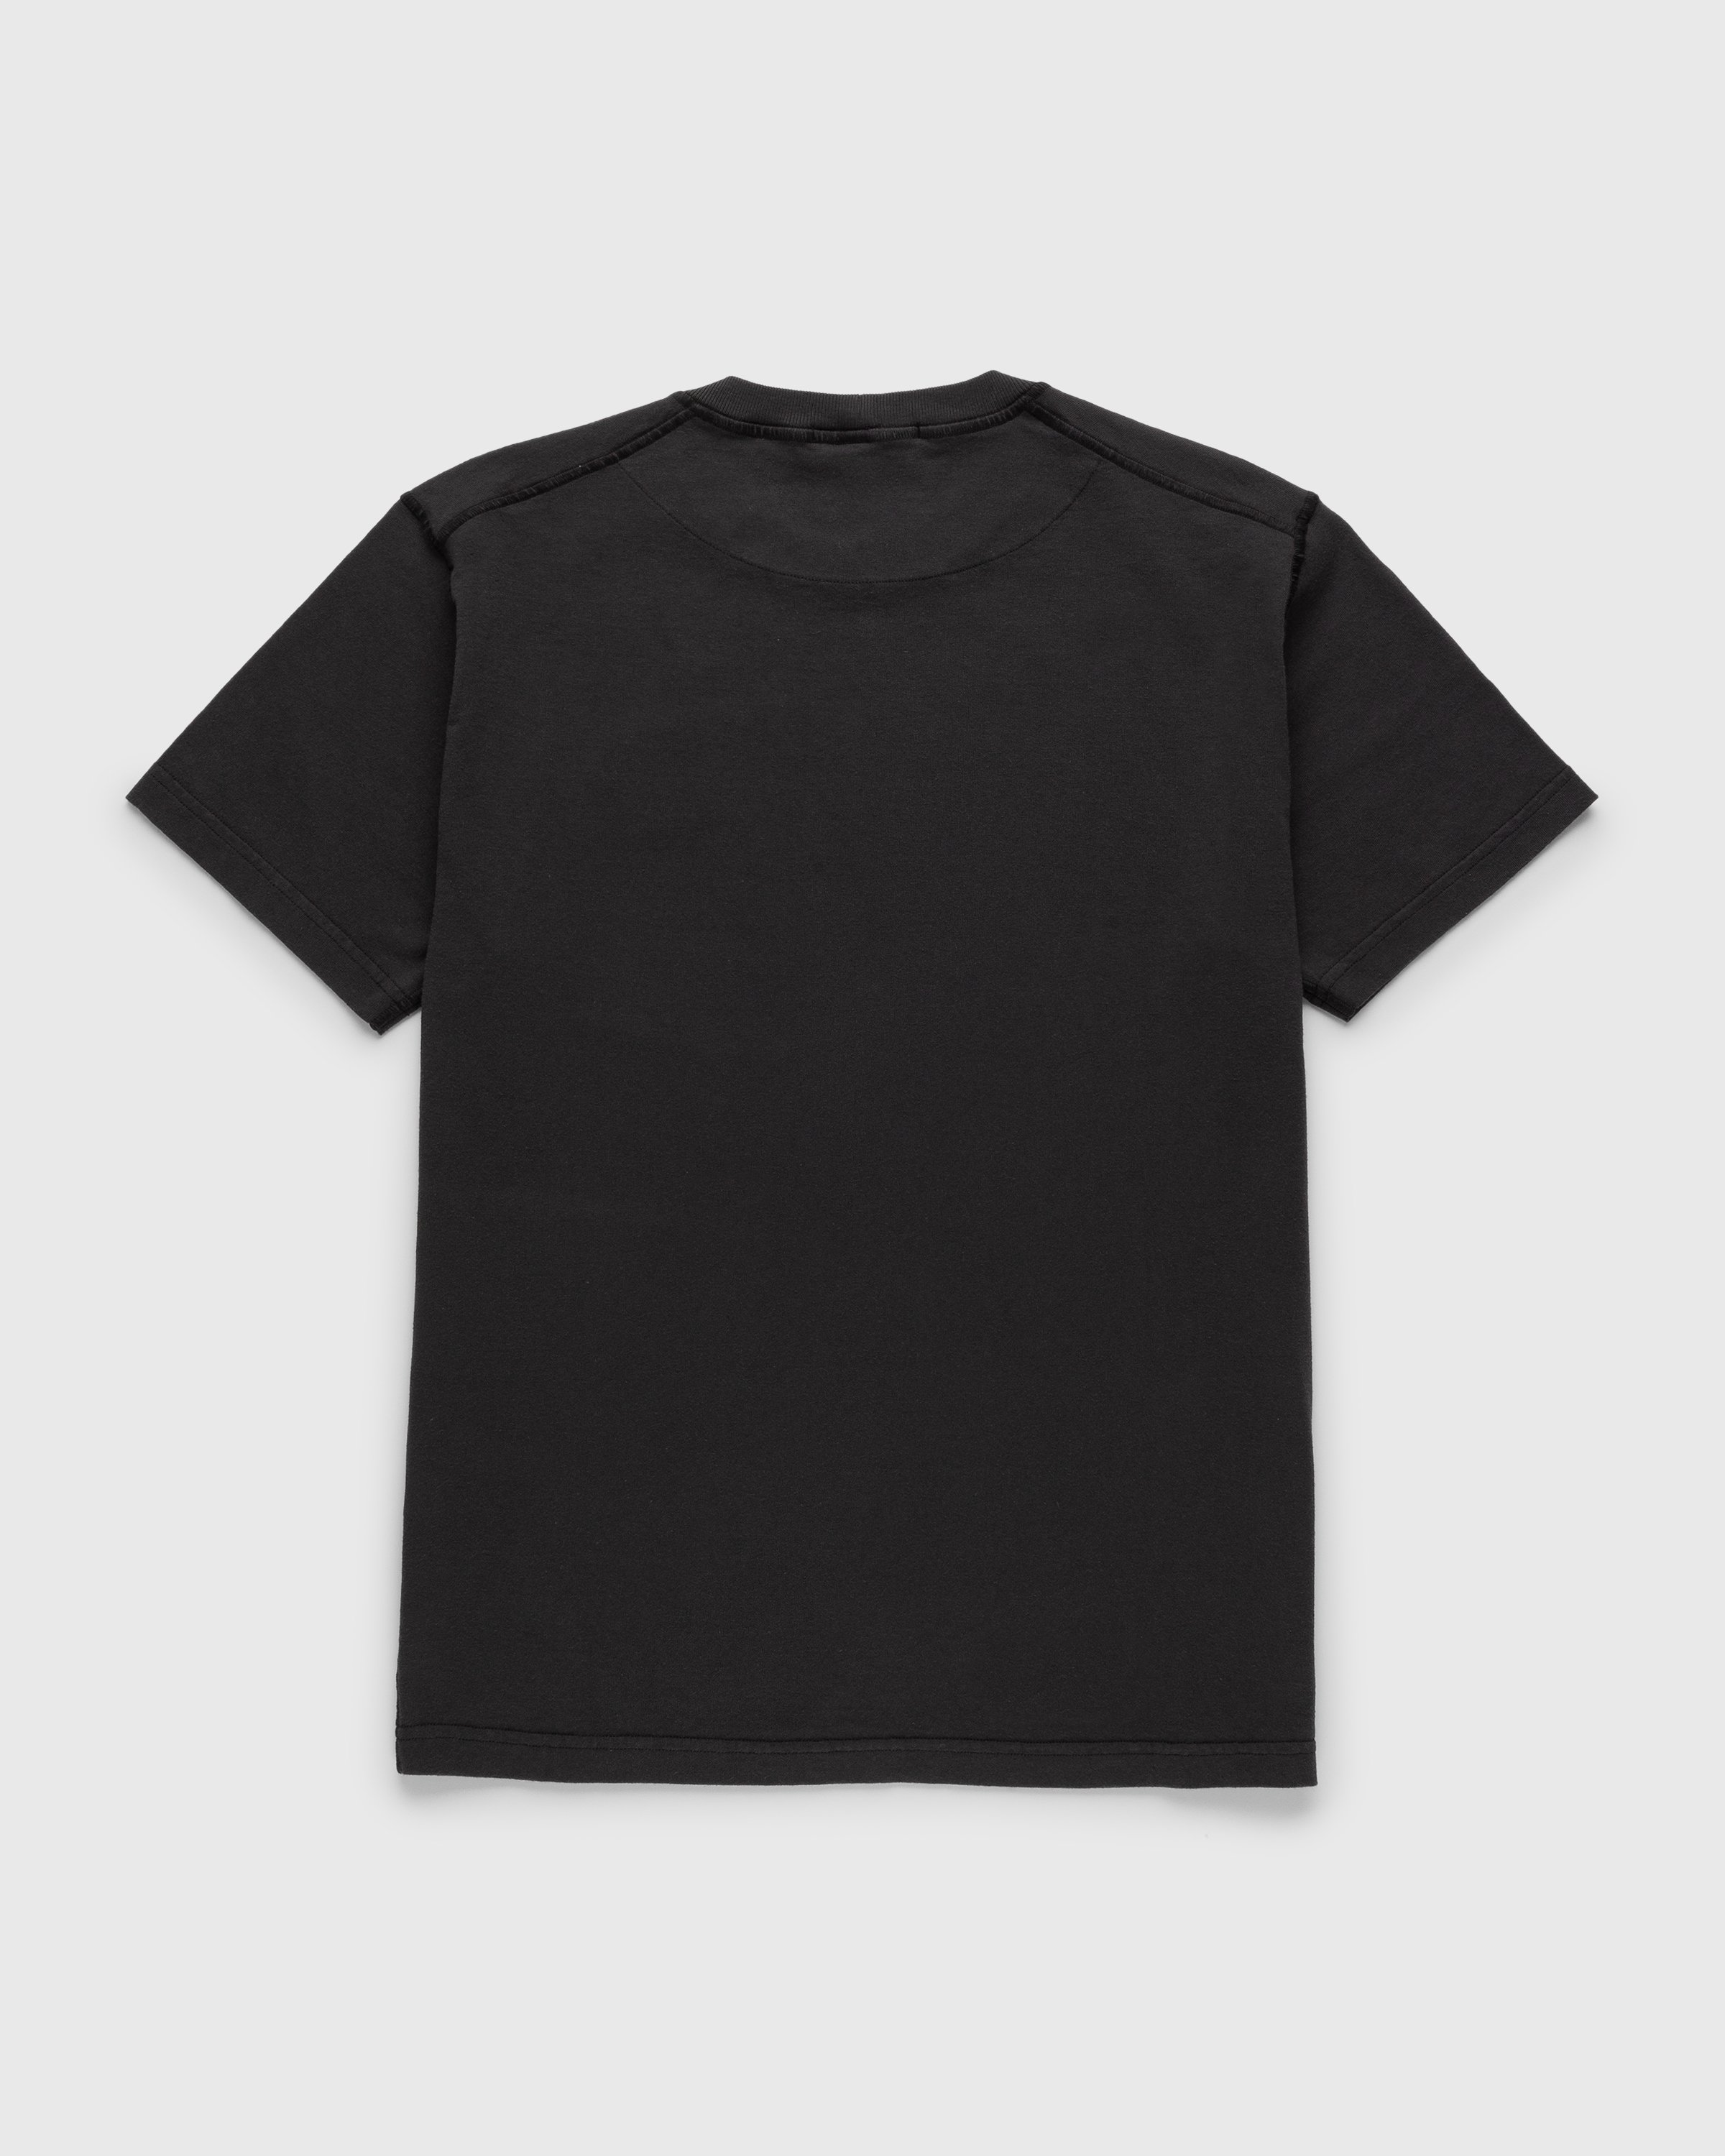 Stone Island - Fissato T-Shirt Charcoal - Clothing - Beige - Image 2